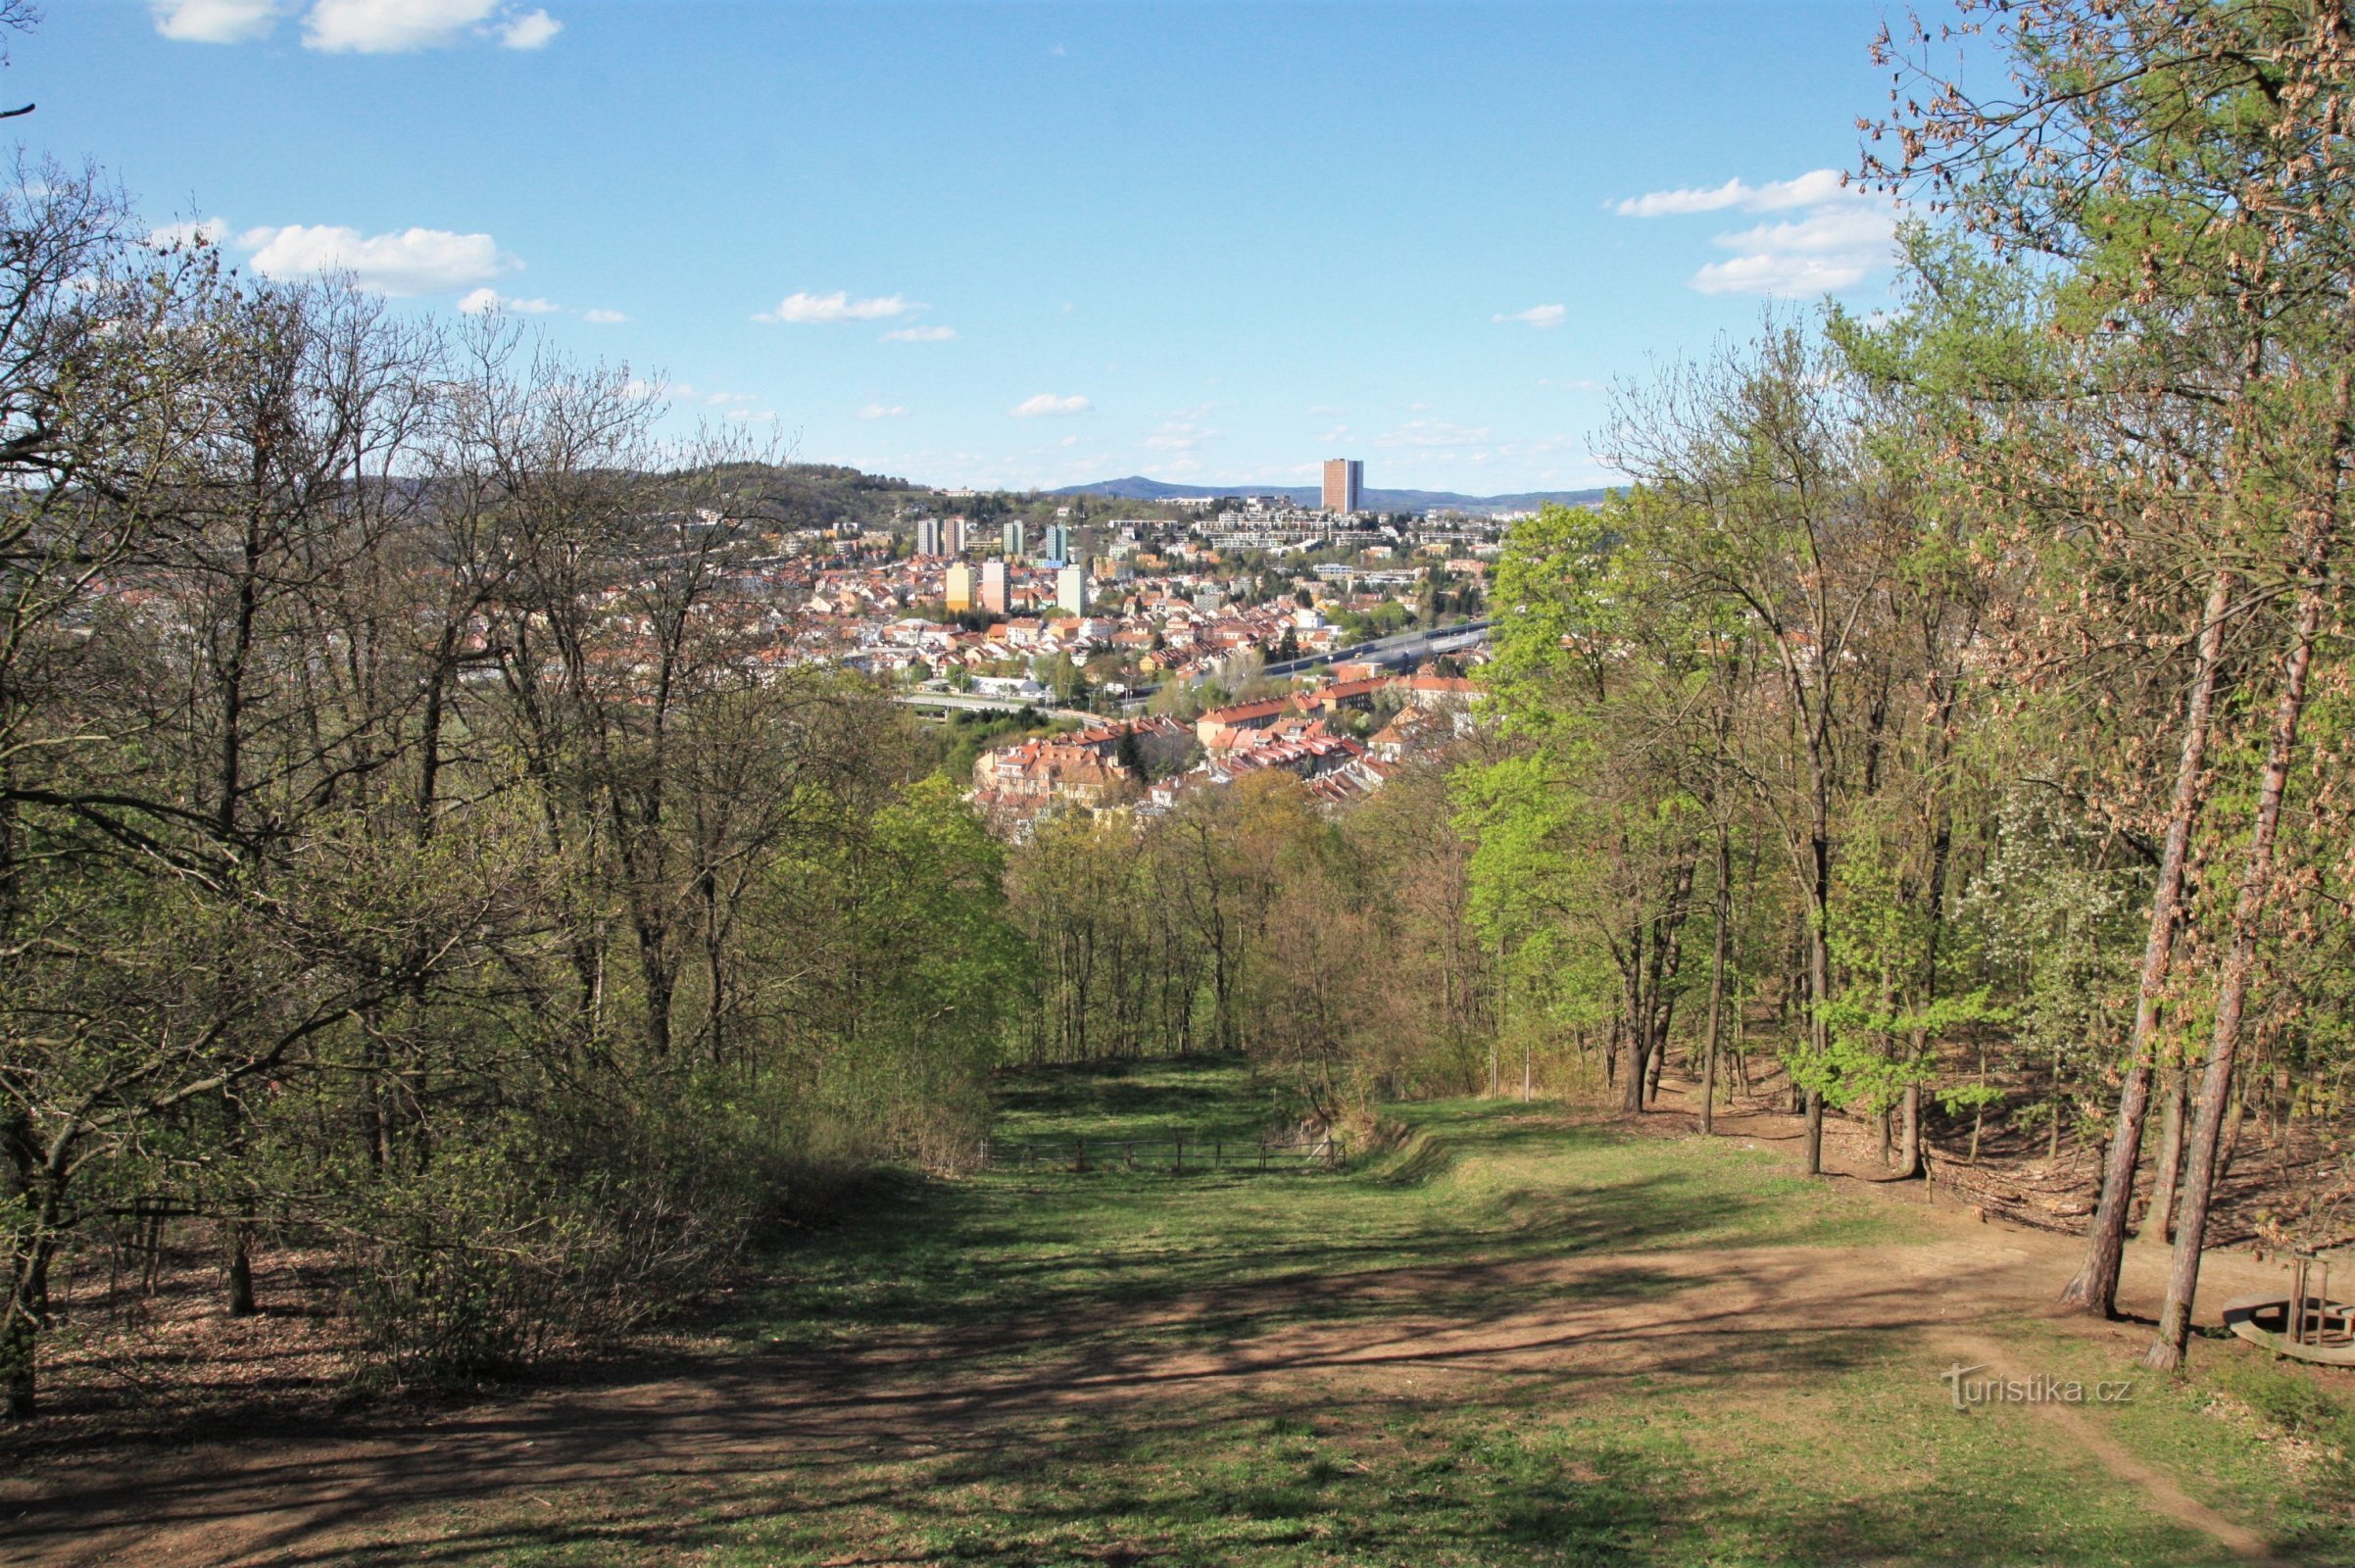 Overview of the former slope to Žabovřeské